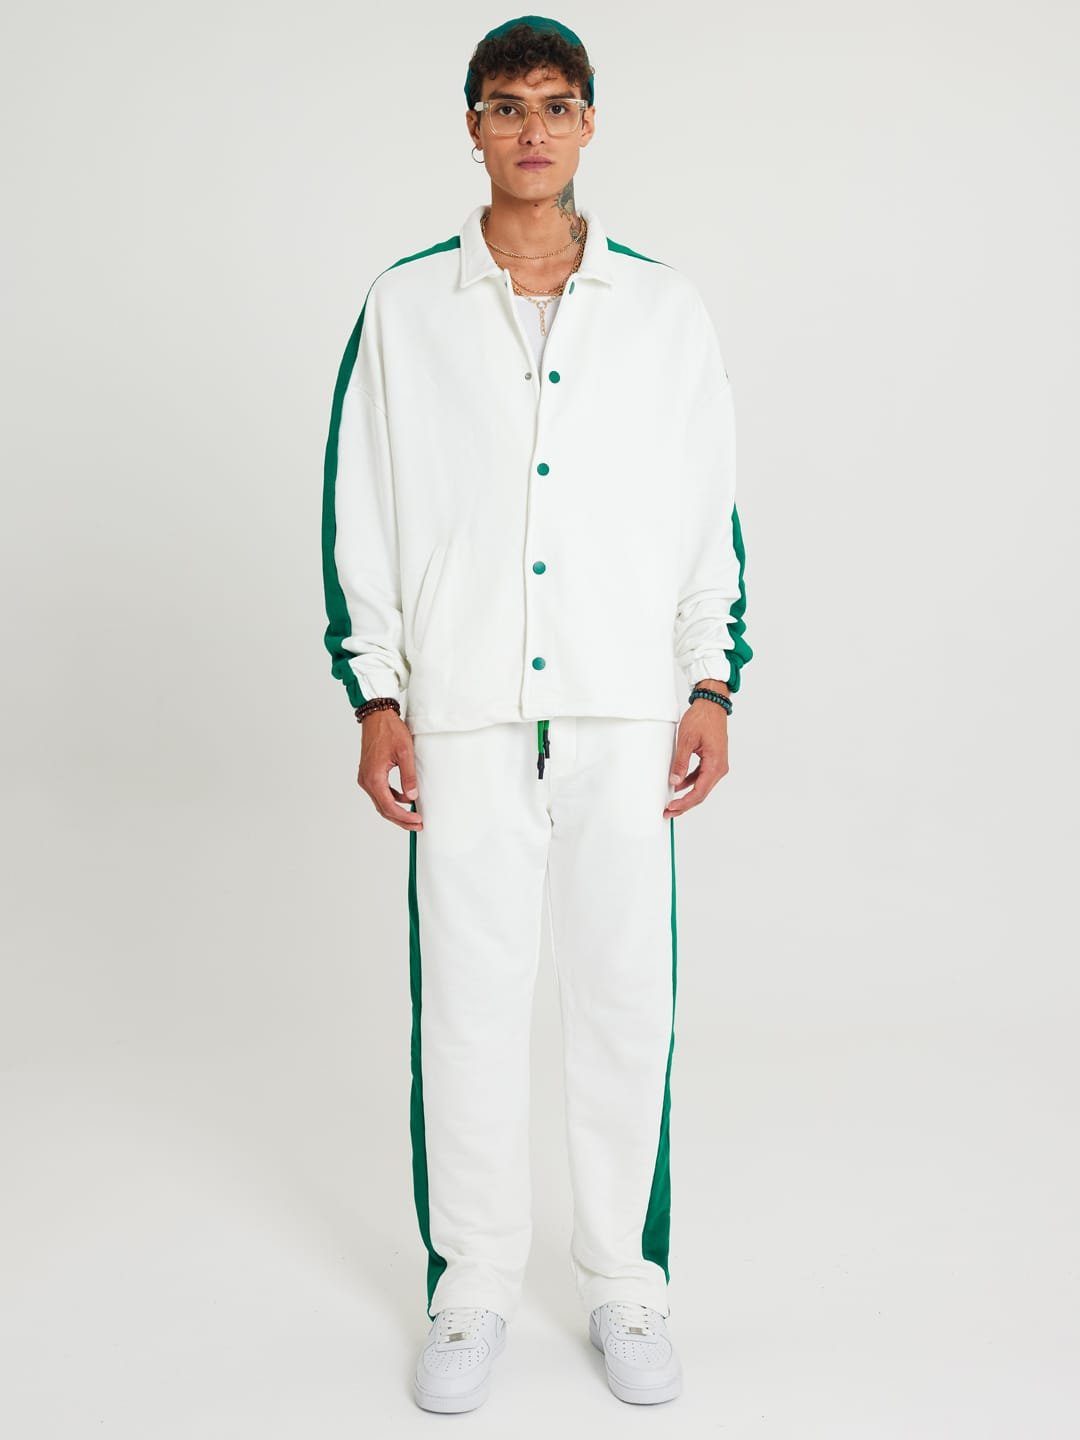 COFI Casuals Jogginganzug Jogger Set Stripe mit Streifen Jacke Hose Jogginganzug Unisex Cotton Weiß